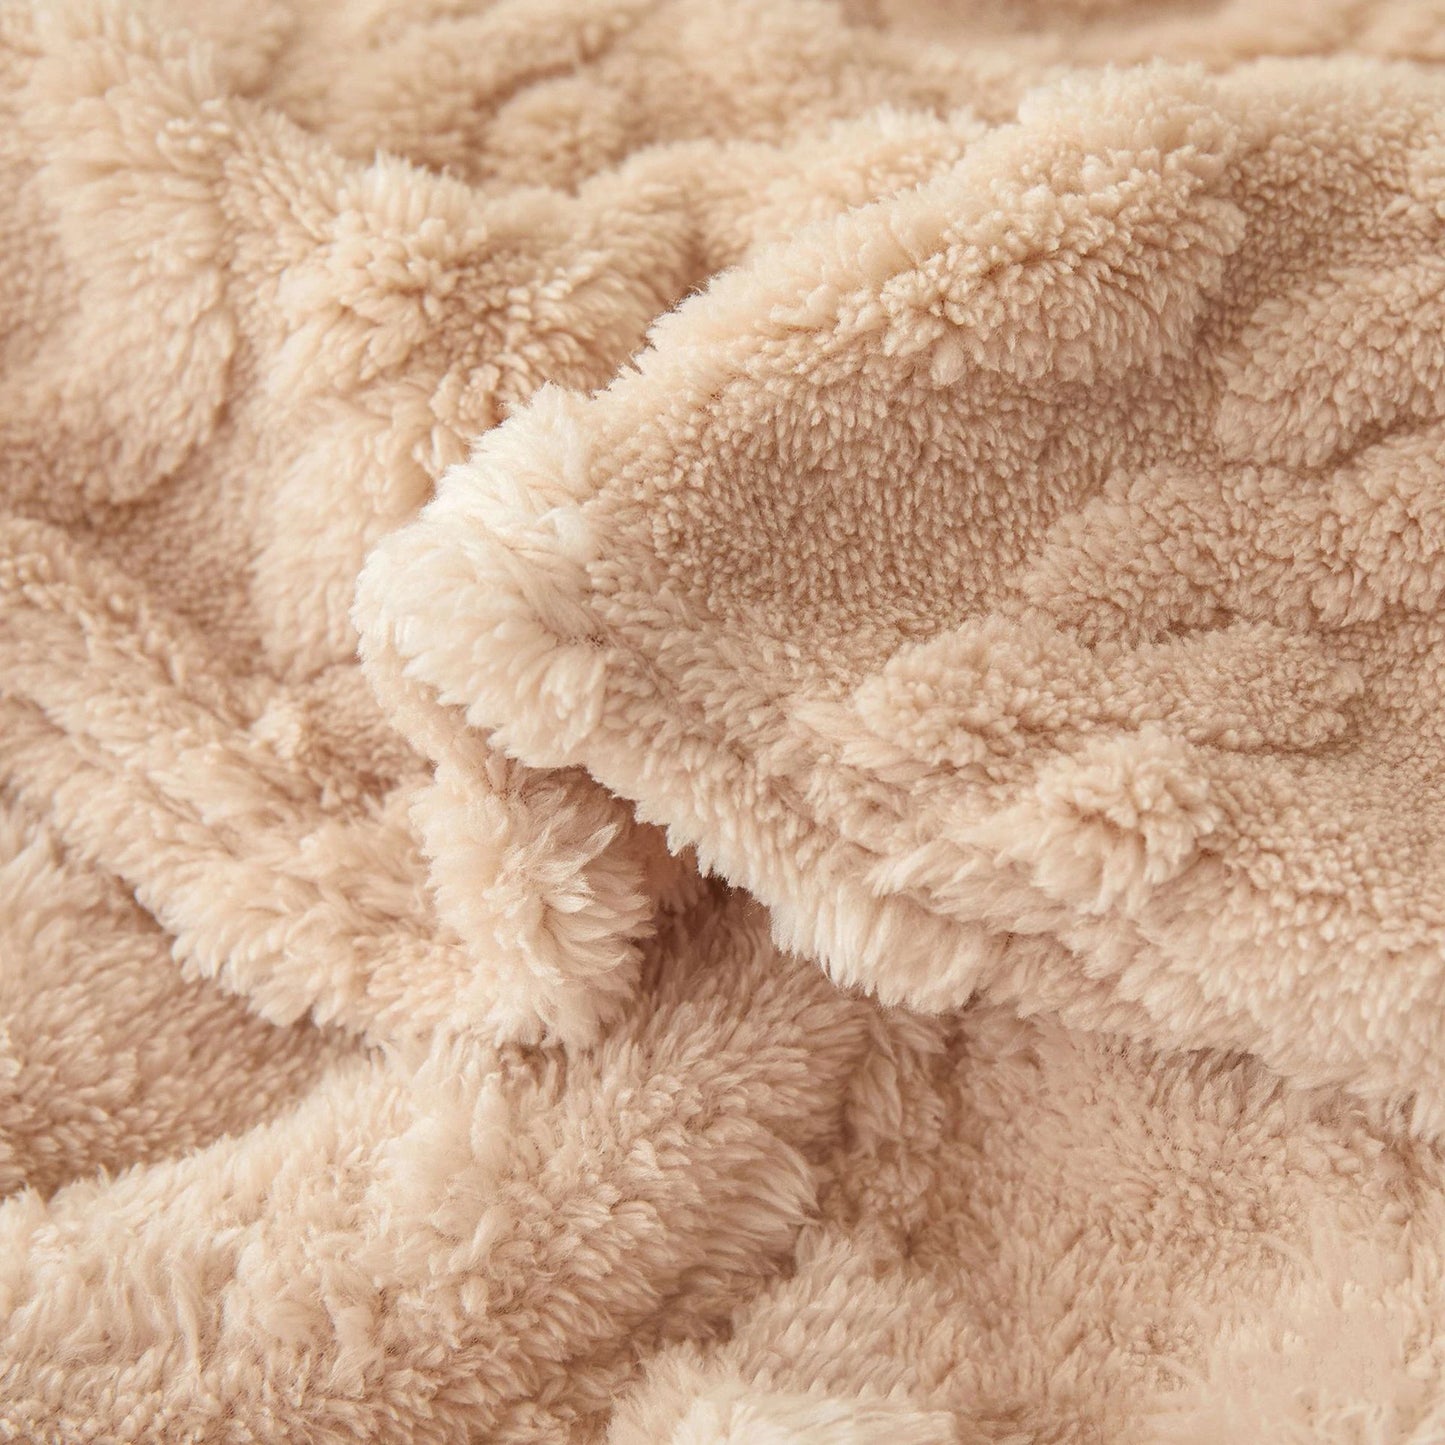 New Winter Blanket Home Warm Sherpa Soft Sofa Cover Throw Newborn Wrap Kids Bedspread Travel Textile Fleece Thick Warm Blanket